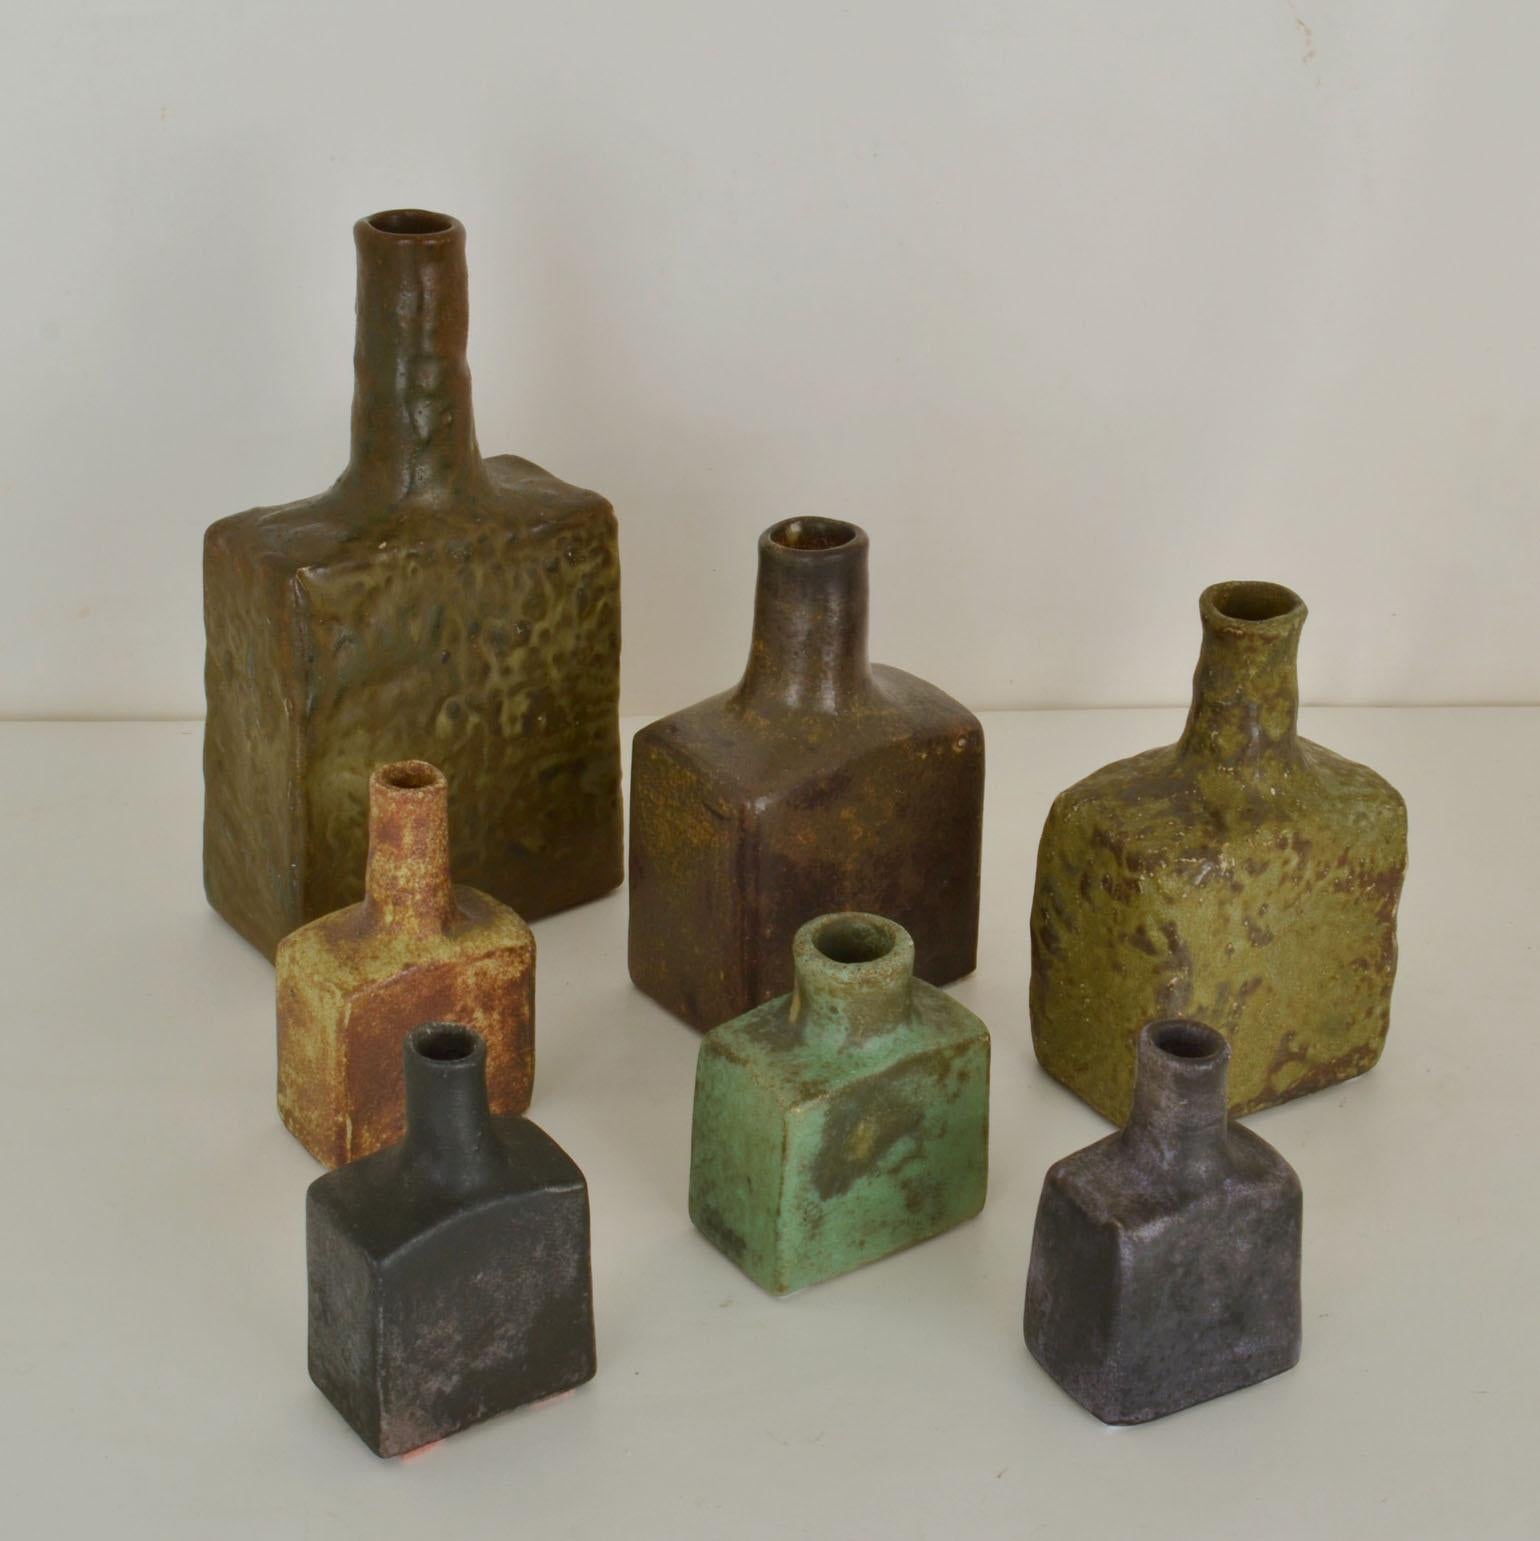 Glazed Square Studio Ceramic Vases in Natural Tones and Organic Glaze